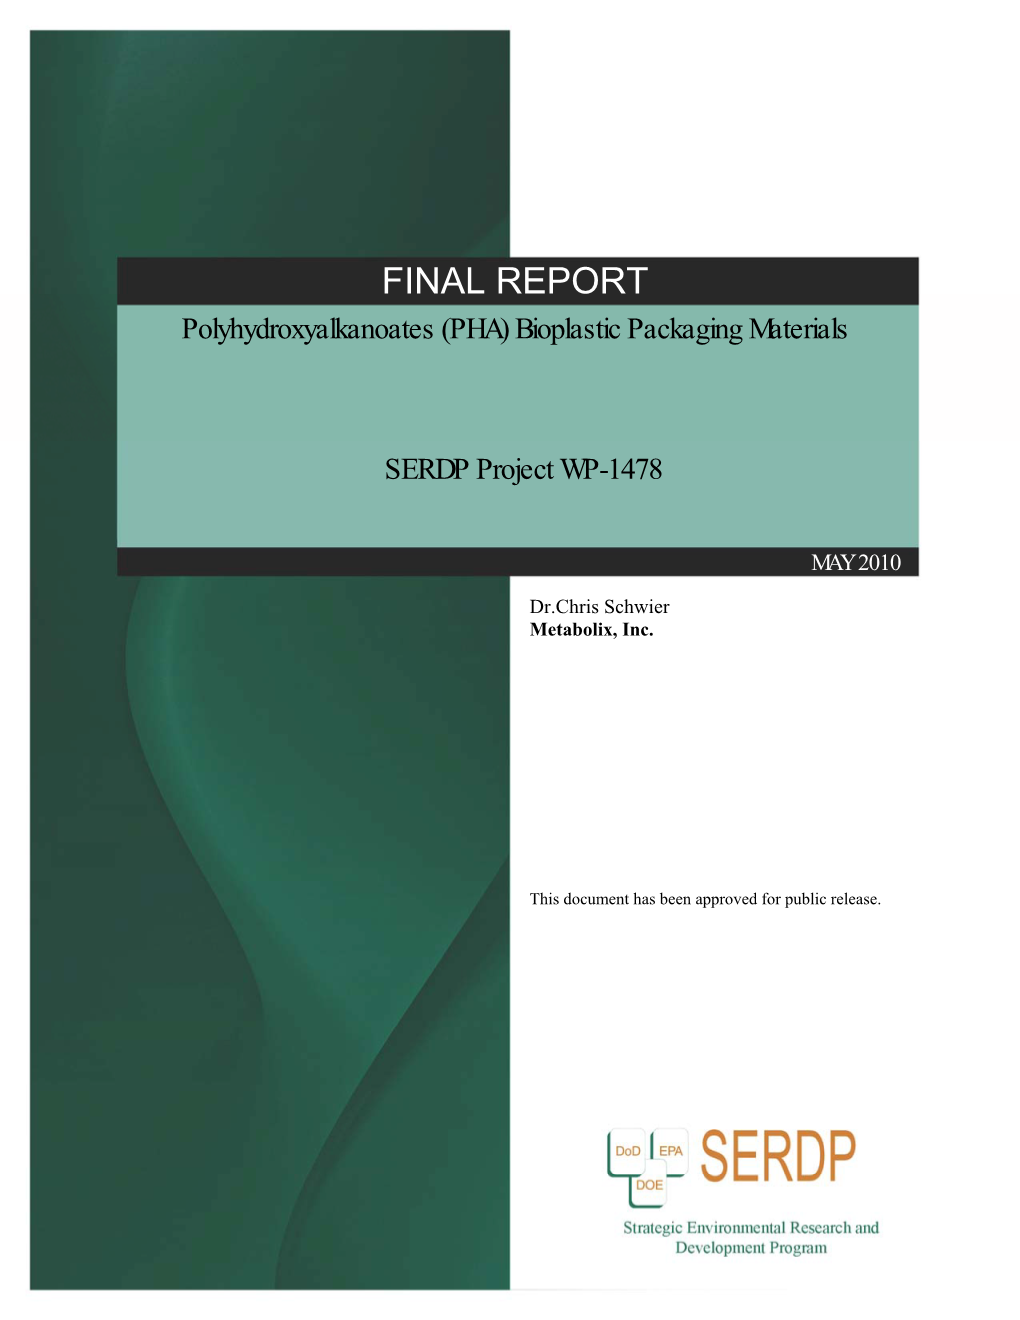 FINAL REPORT Polyhydroxyalkanoates (PHA) Bioplastic Packaging Materials